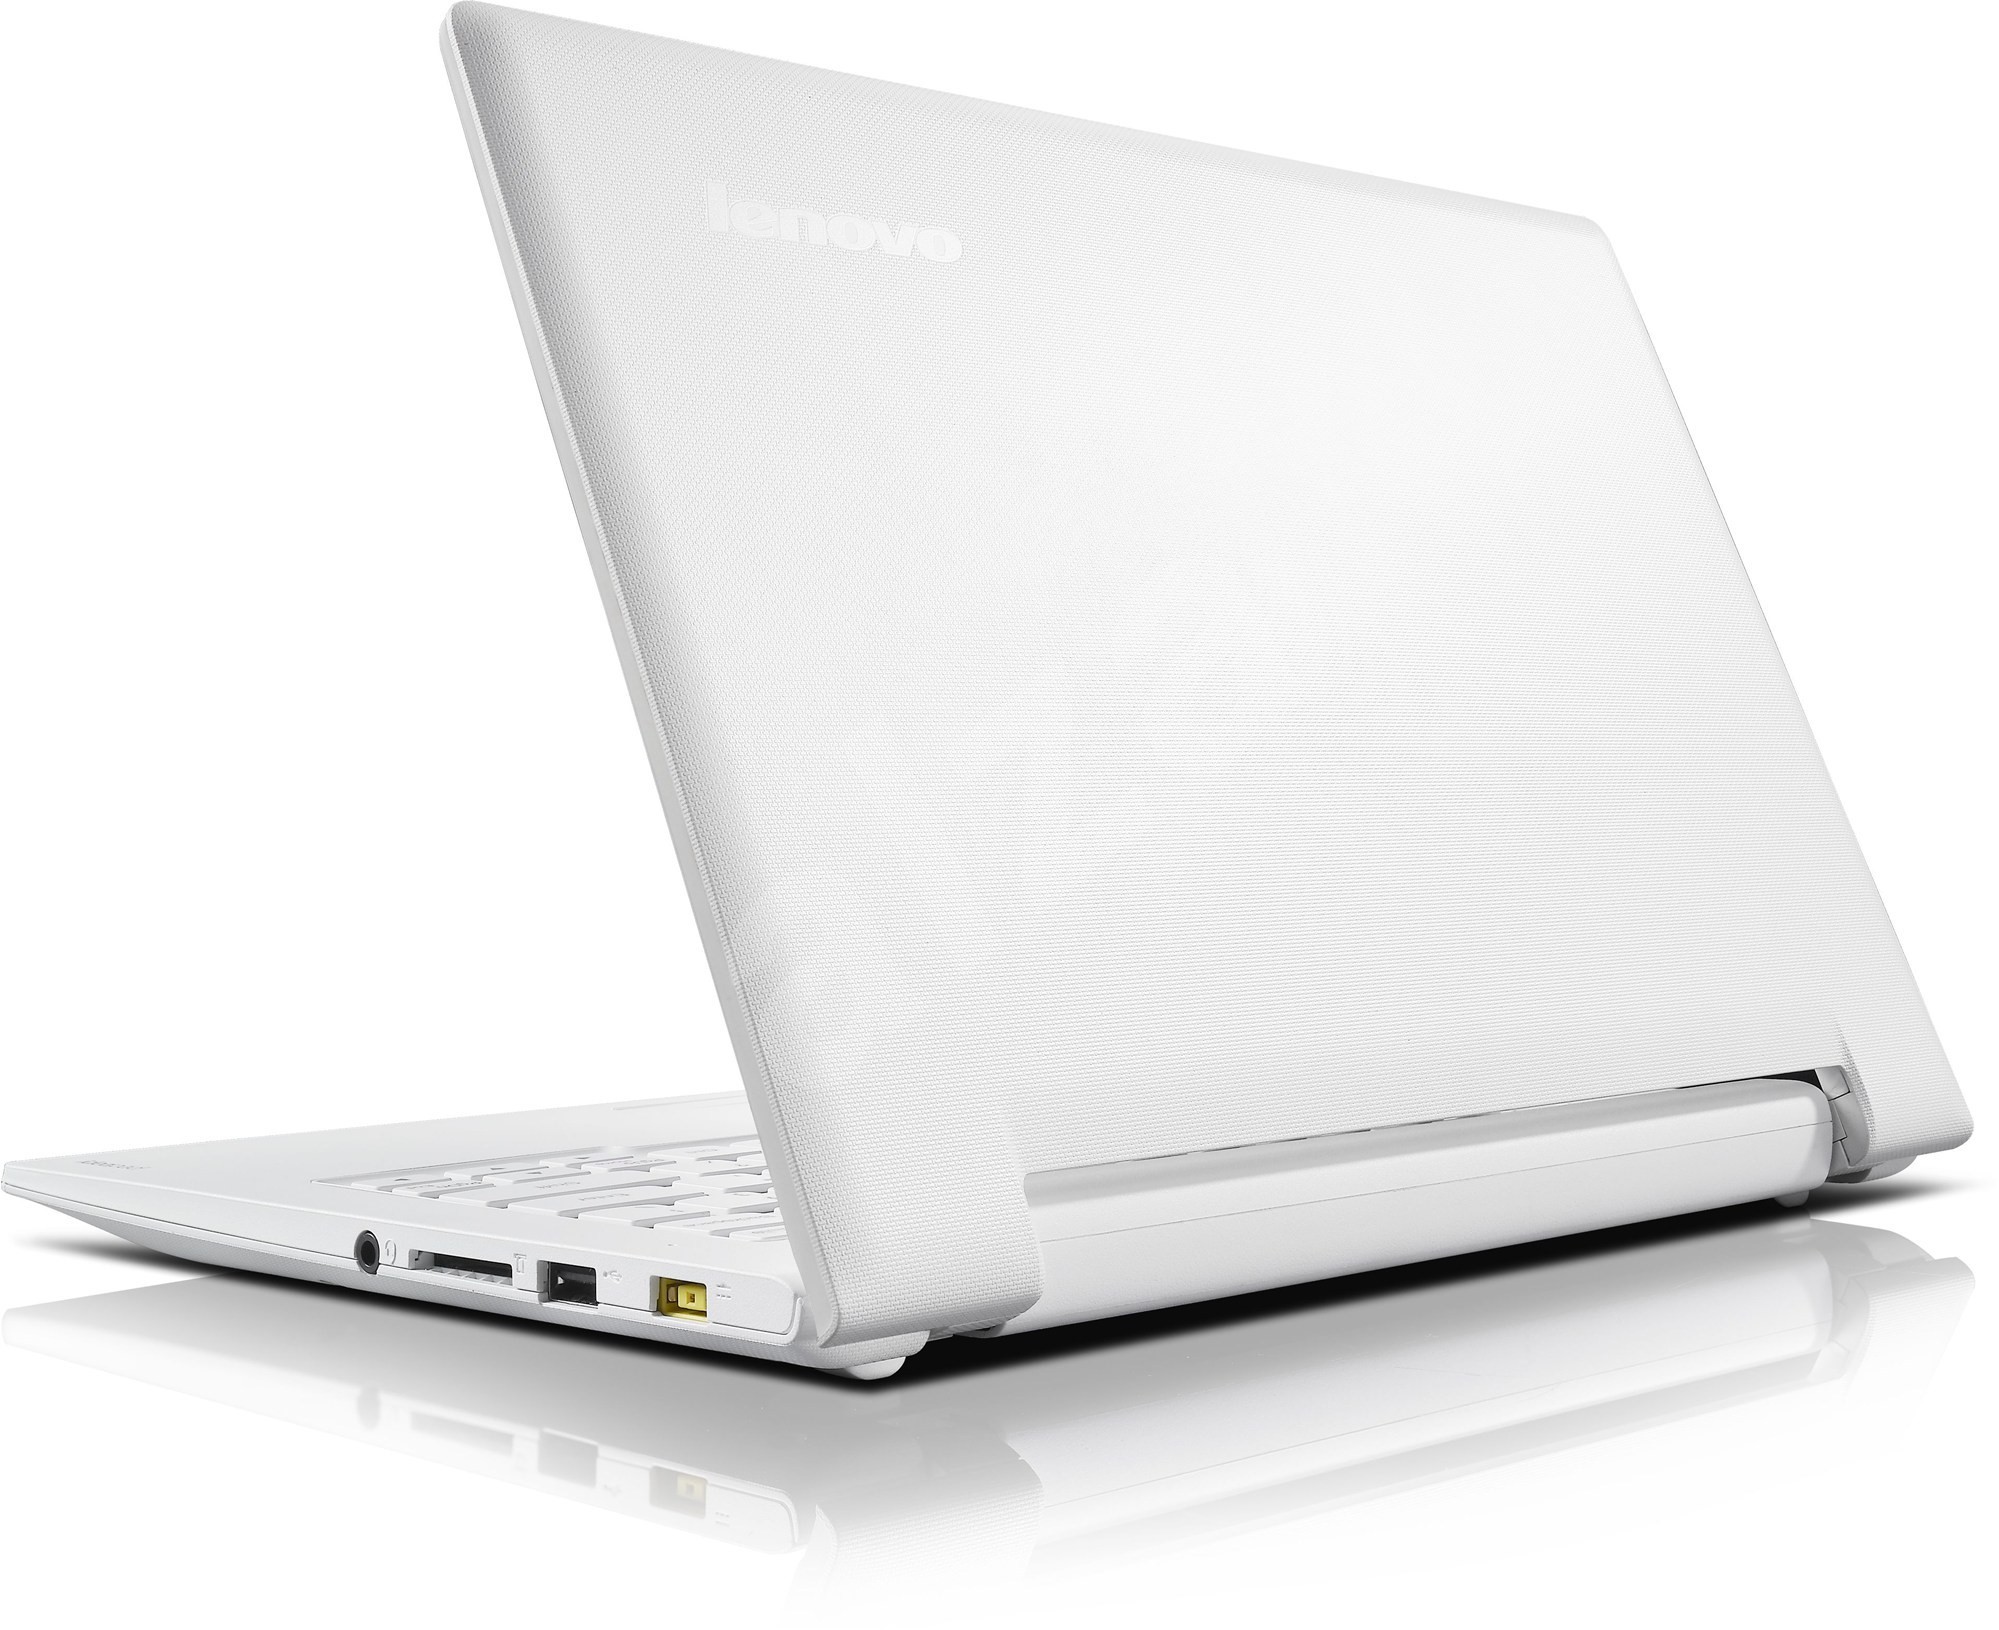 Lenovo IdeaPad S210 Touch White - Notebook | Alza.cz